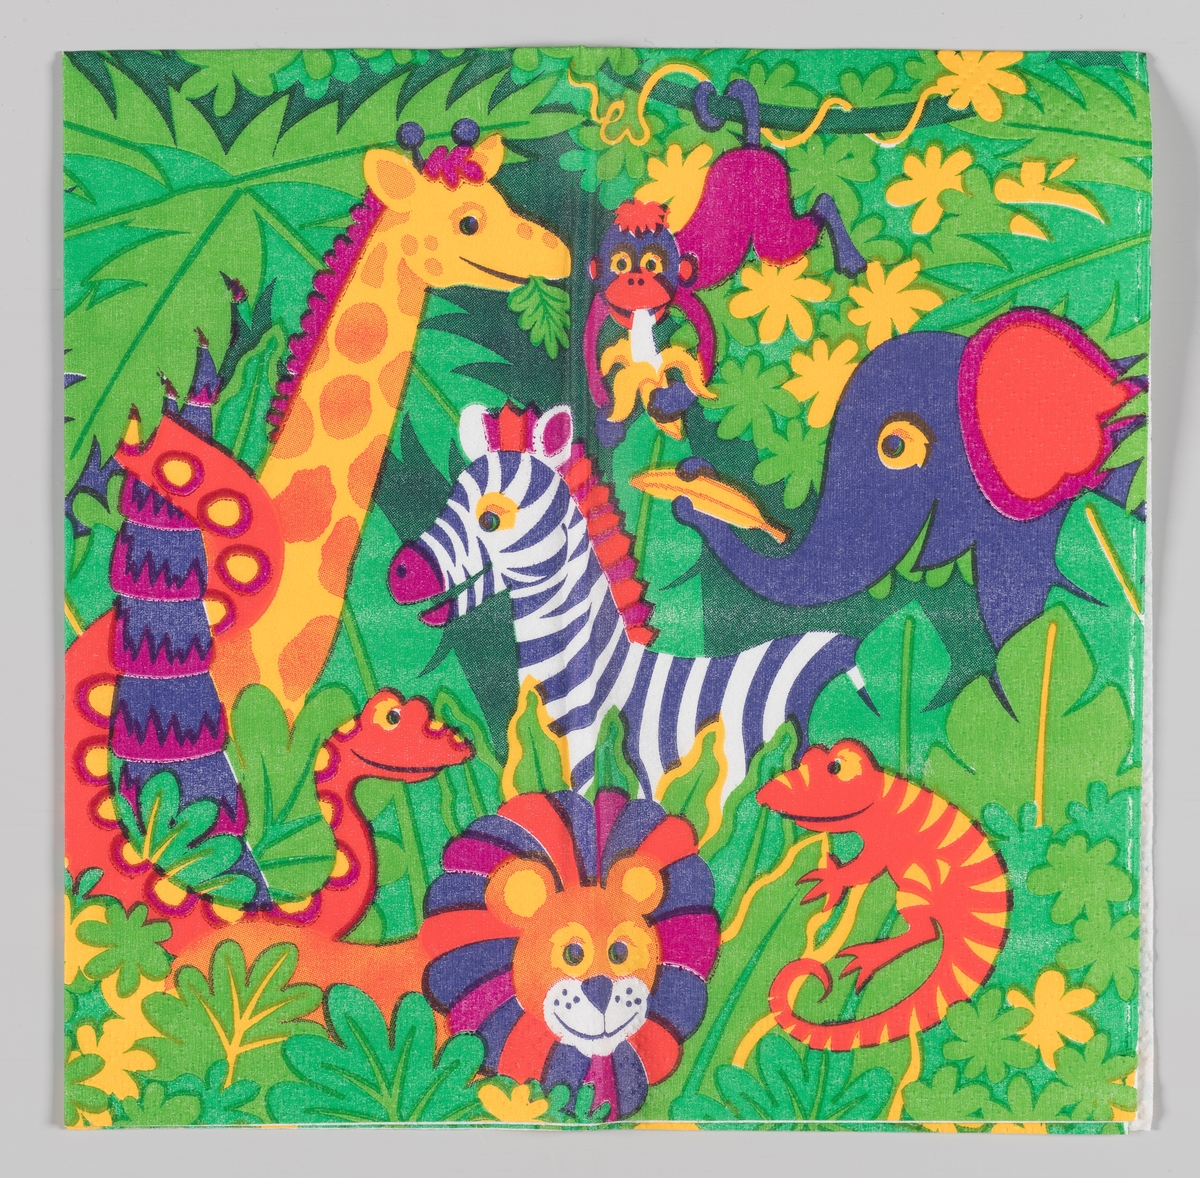 Afrikanske dyr i en jungel: En giraff, en ape, en elefant, en sebra, en slange en løve og en øgle